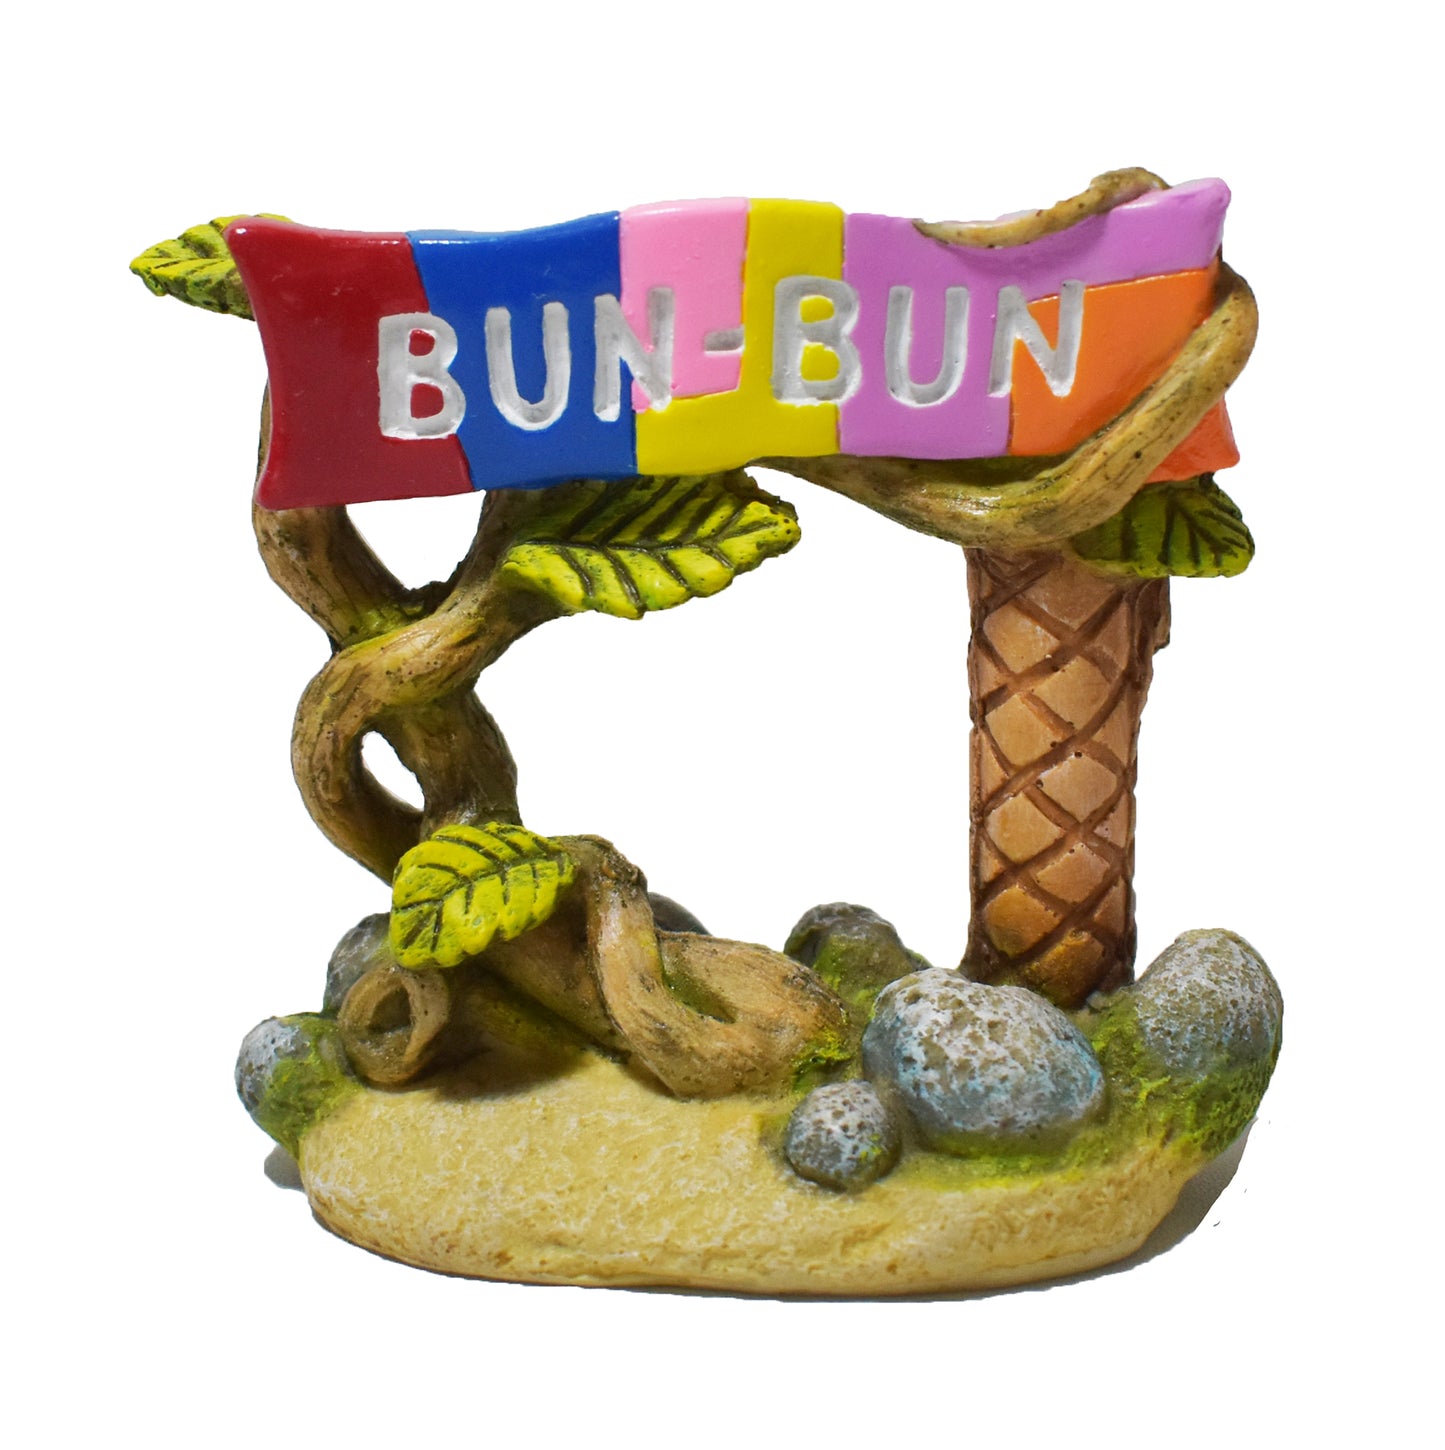 WW Bun Bun Sign Resin Ornament - Map Price $8.49